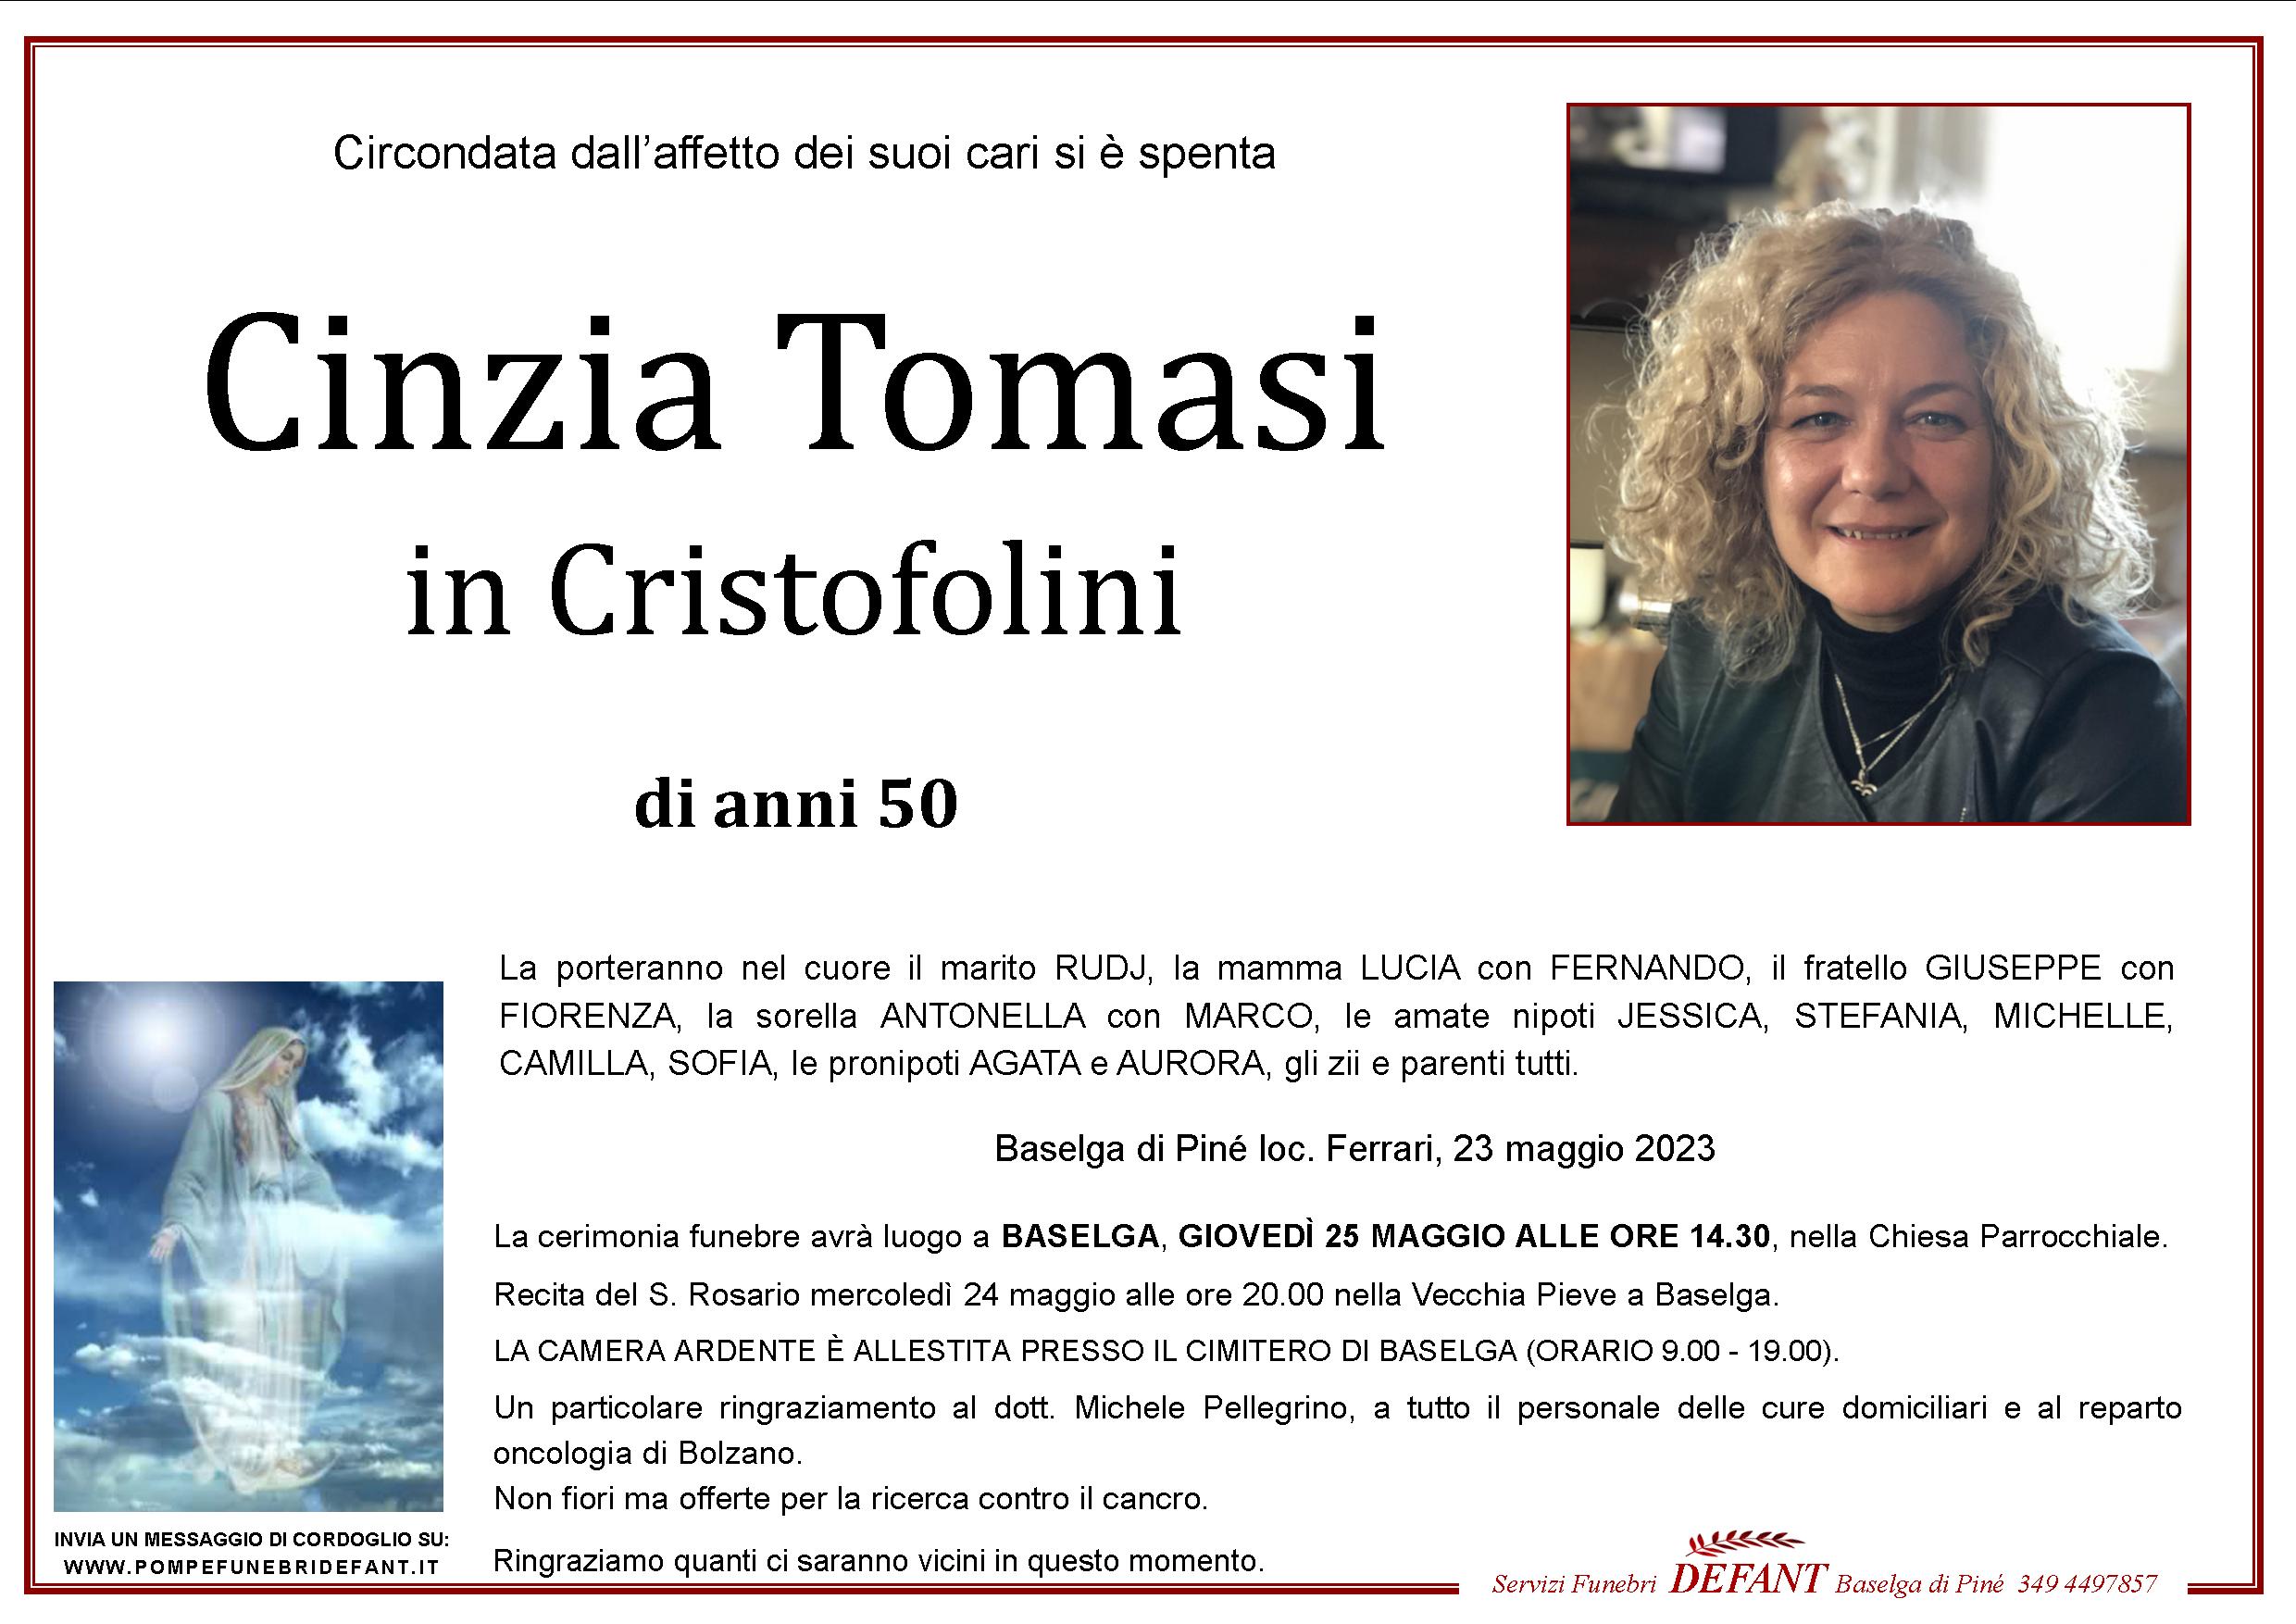 Cinzia Tomasi